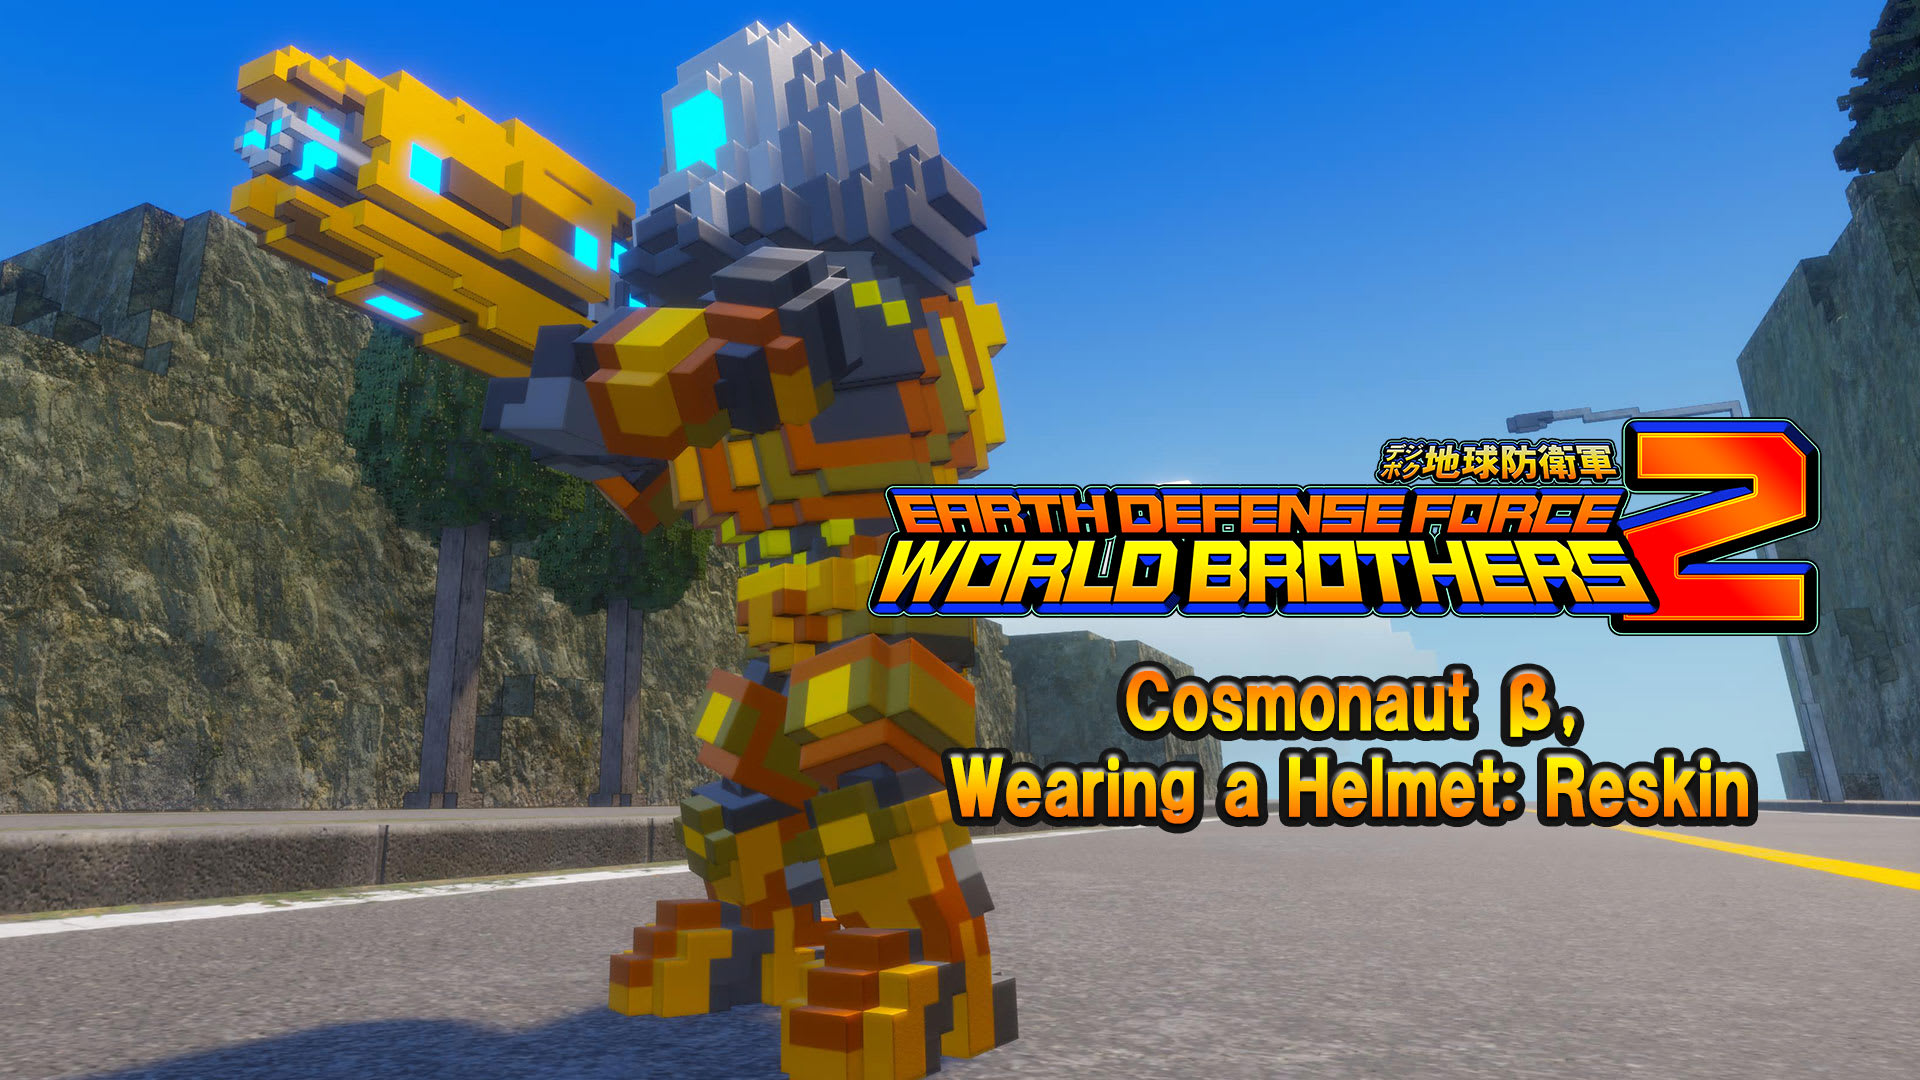 "Additional character" Cosmonaut β, Wearing a Helmet: Reskin